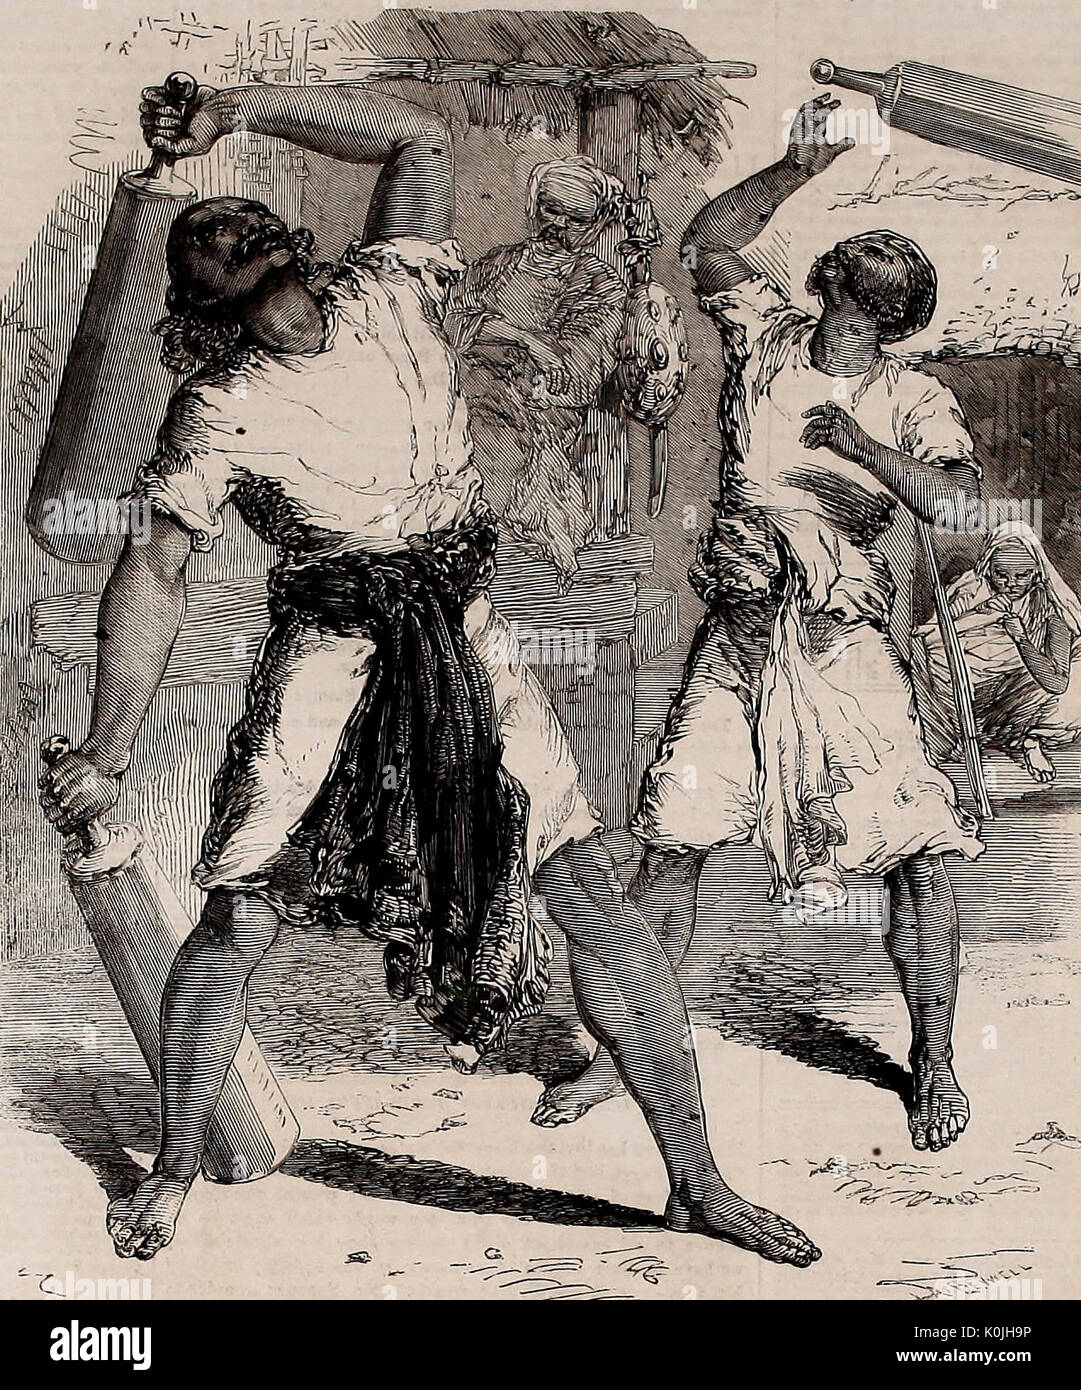 Calisthenic Exercises in India, circa 1860 Stock Photo